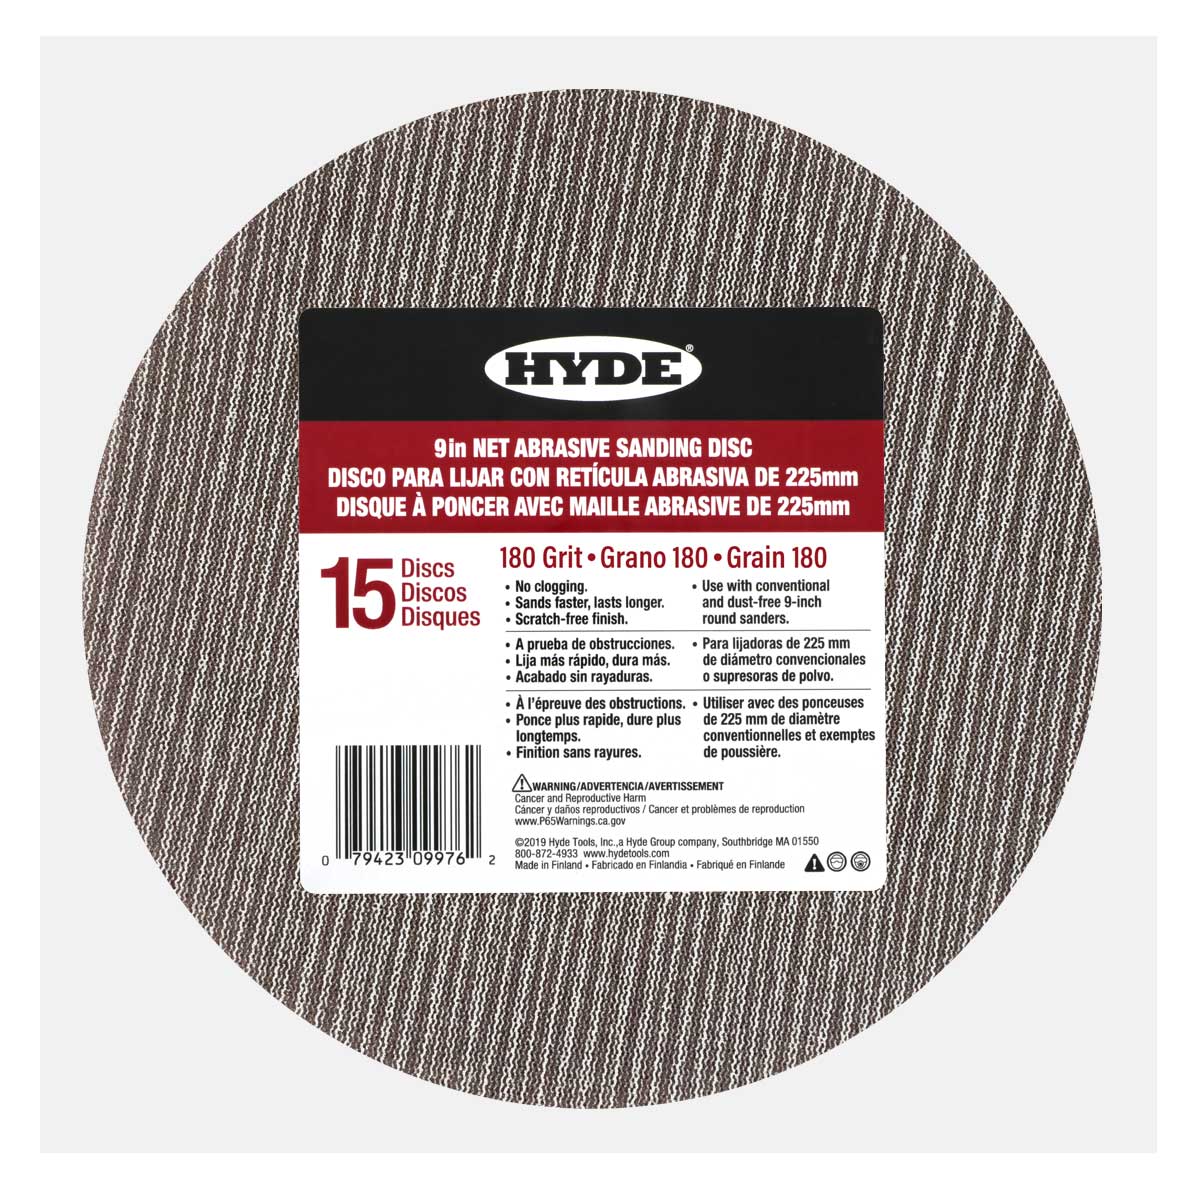 Hyde Net Abrasive Sanding Discs 180